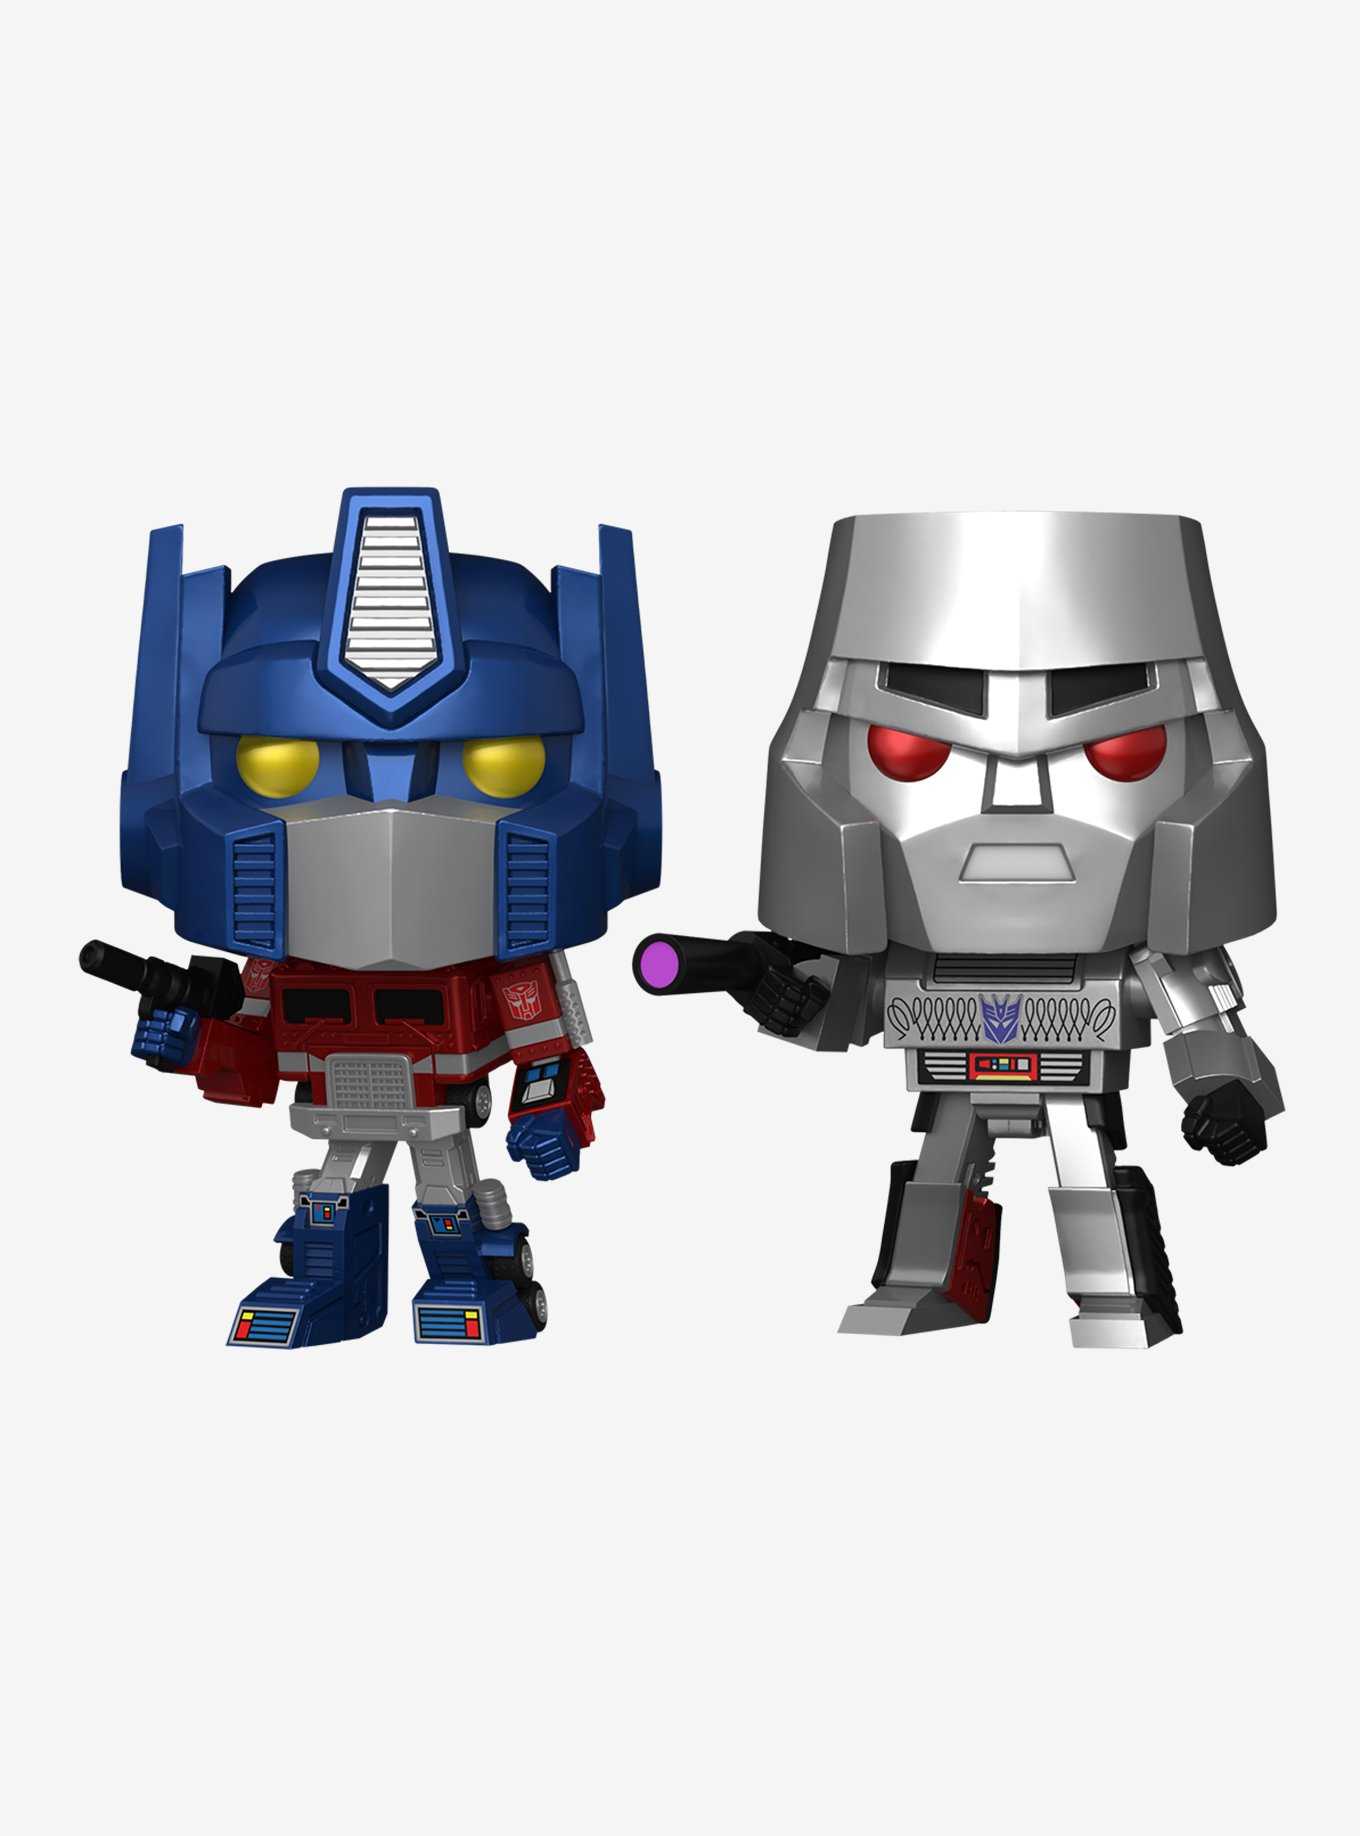 Funko Transformers Pop! Retro Toys Optimus Prime & Megatron Vinyl Figure Set Hot Topic Exclusive, , hi-res